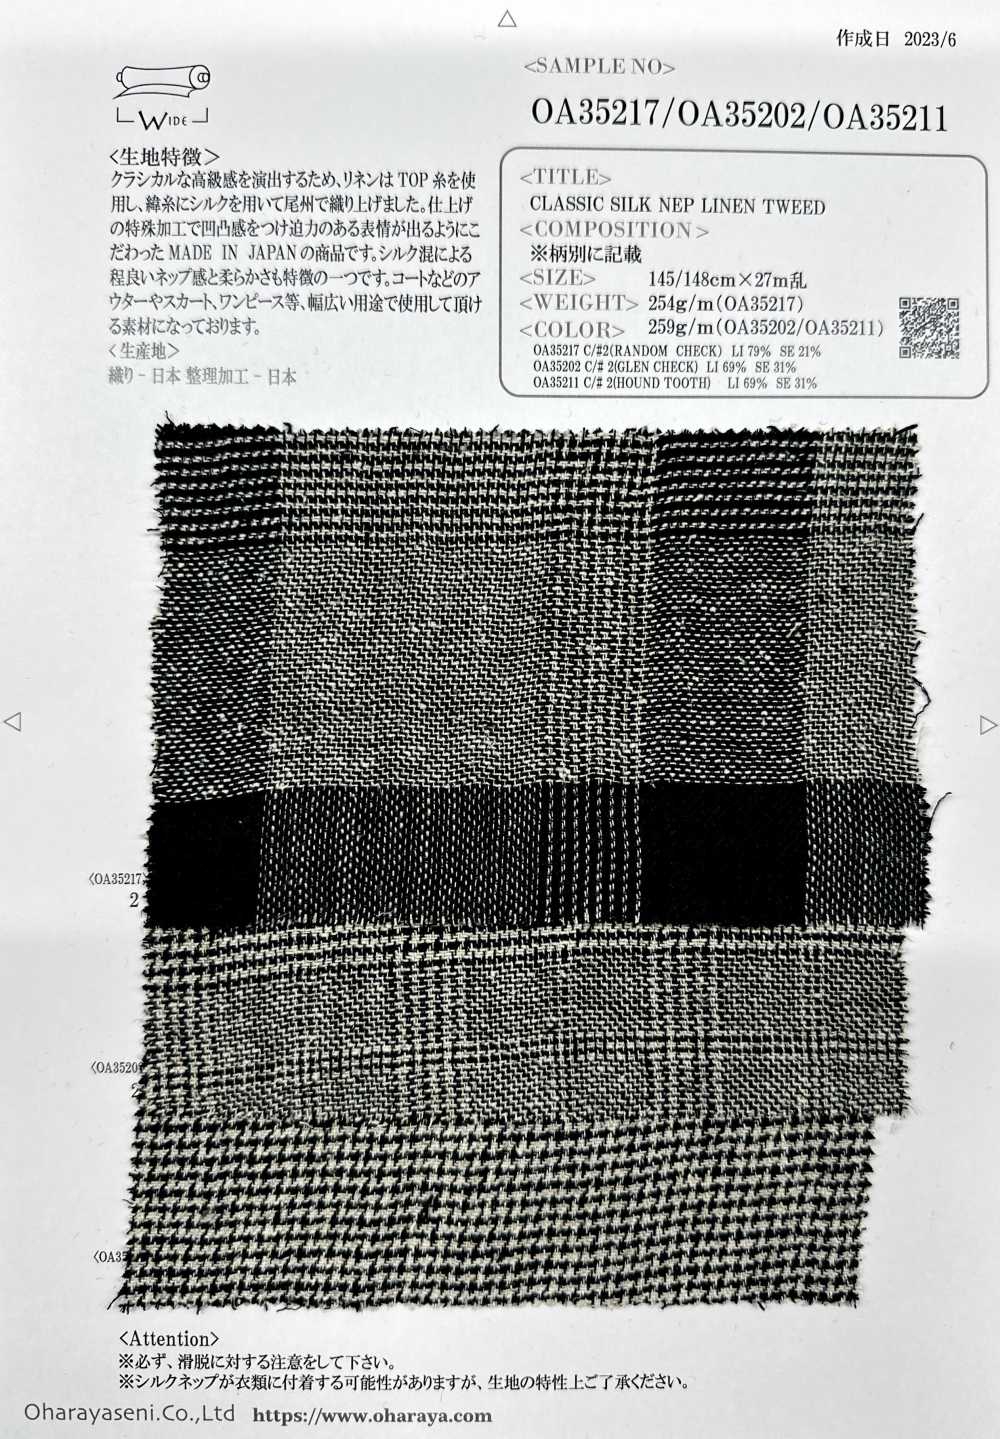 OA35211 LINO CLÁSICO TWEED LINO NEP[Fabrica Textil] Oharayaseni